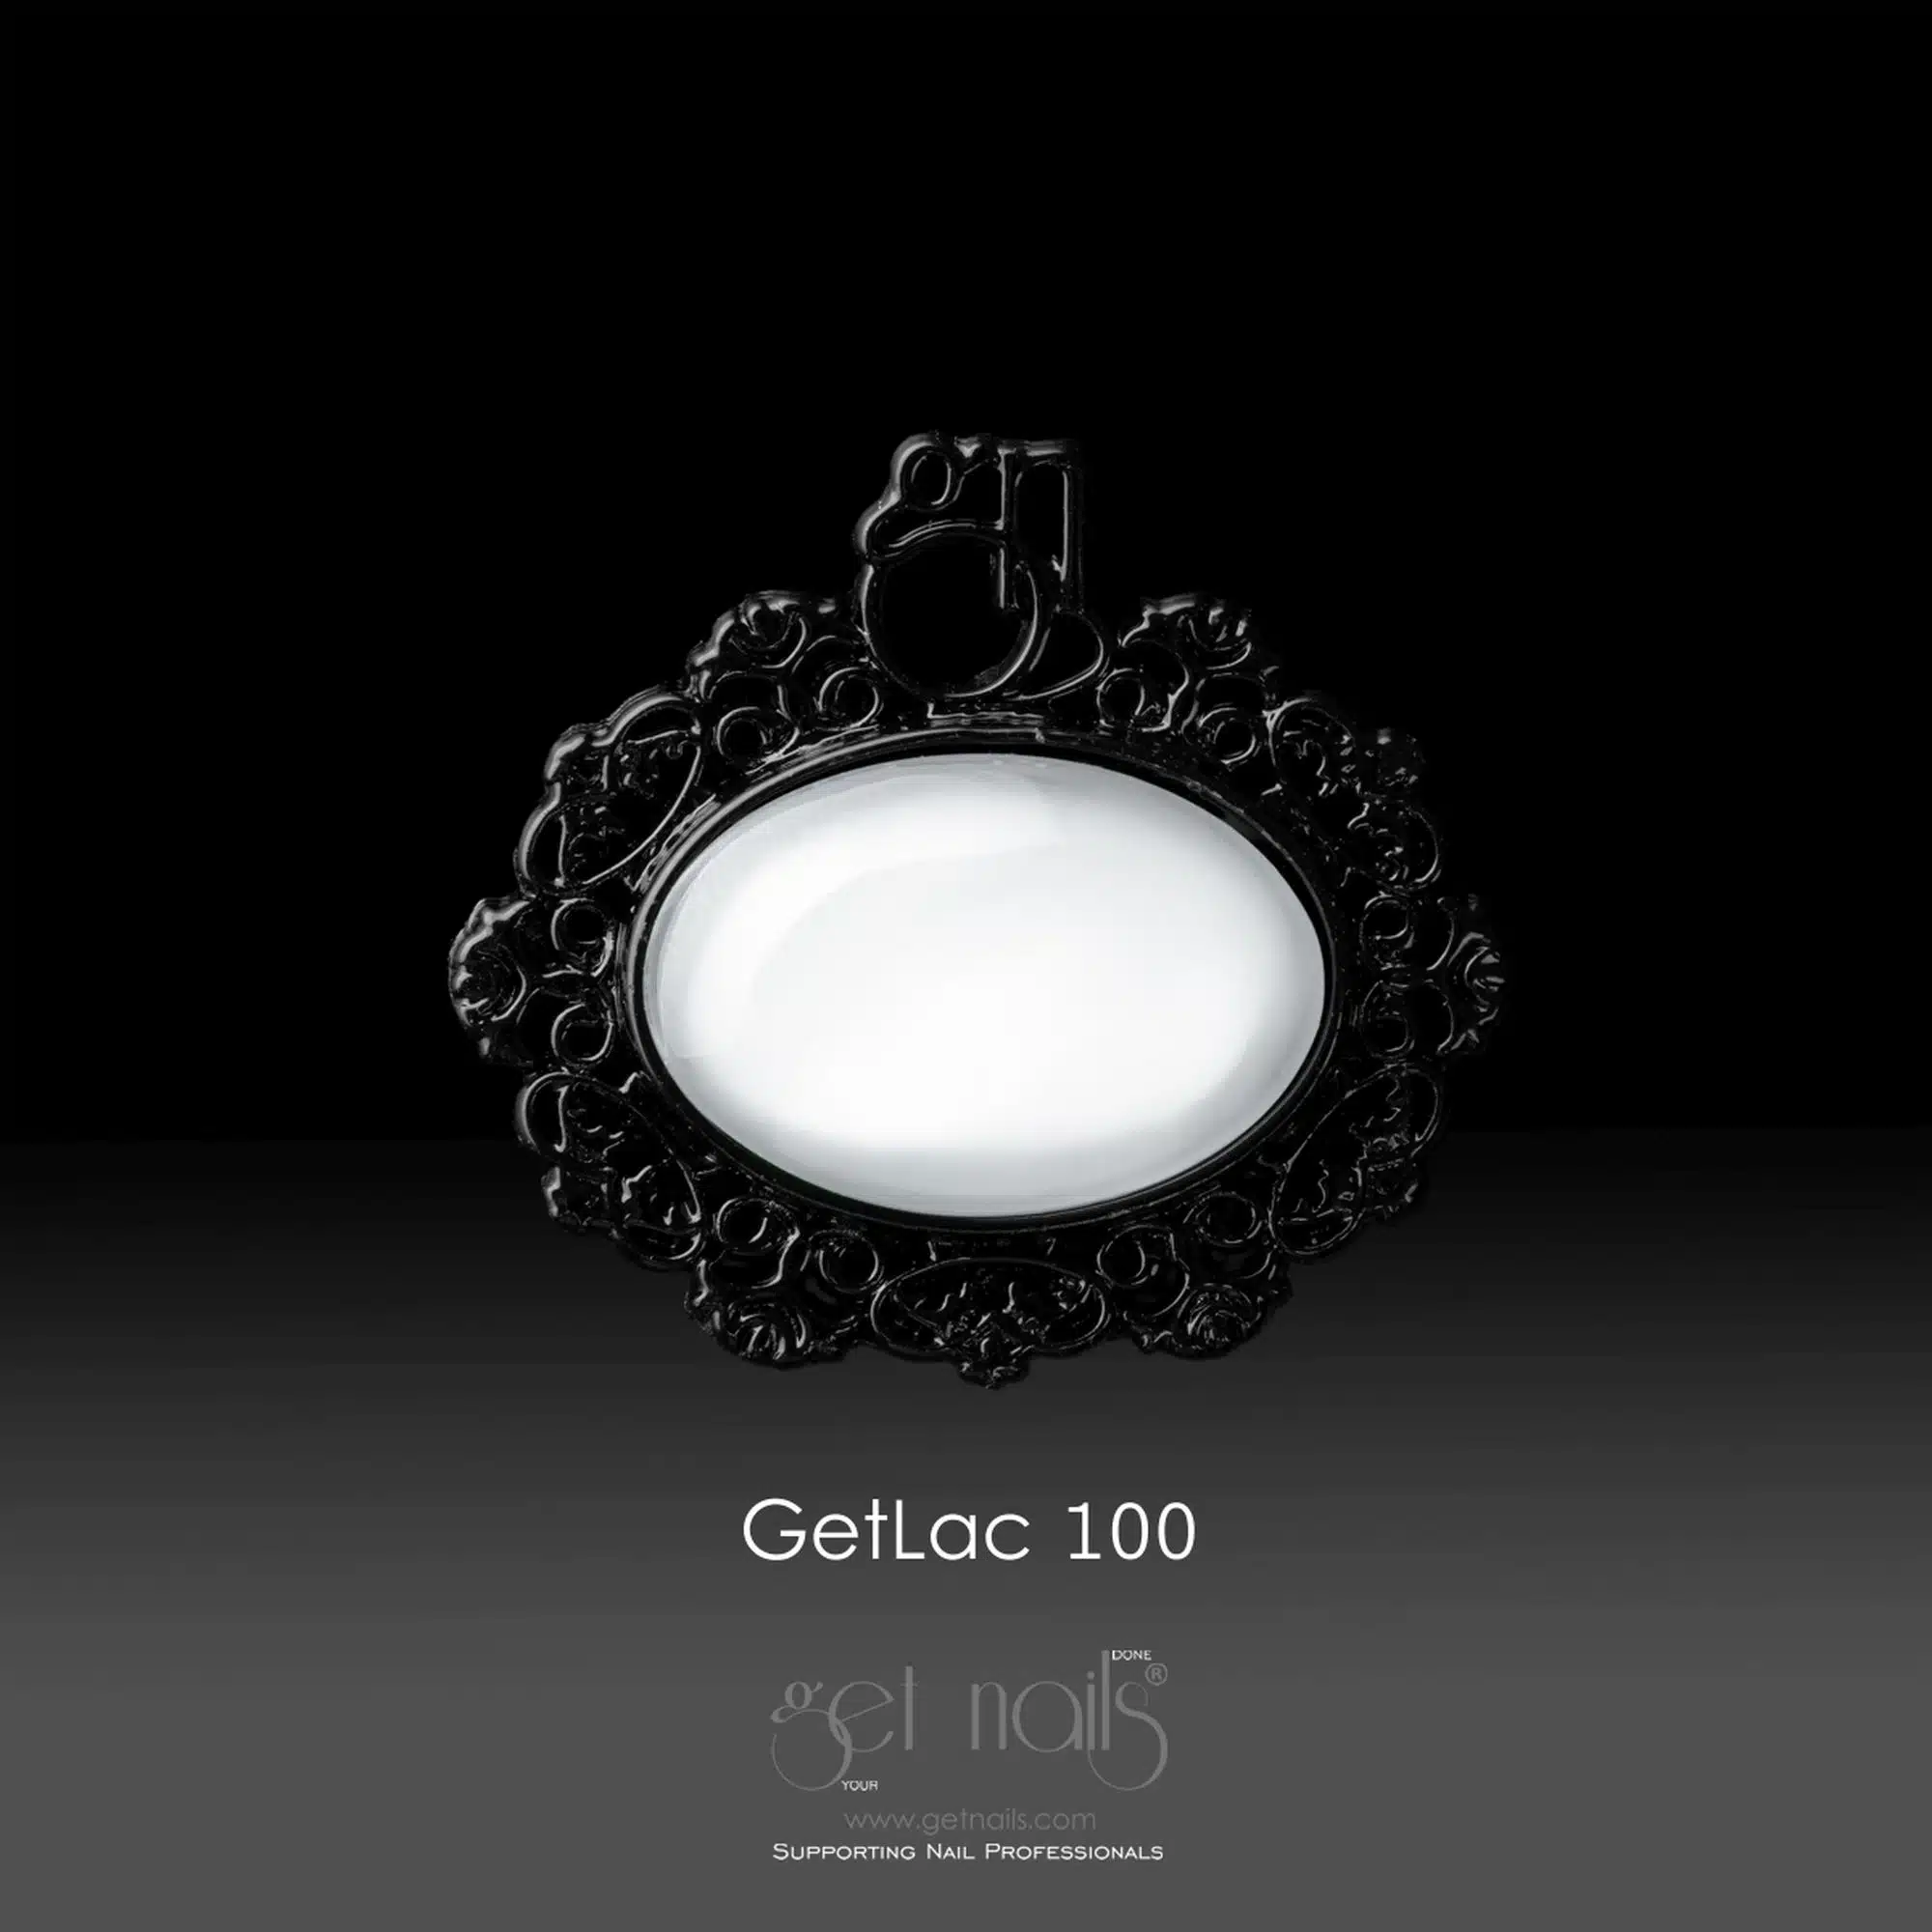 Get Nails Austria - GetLac 100 Bianco 15g